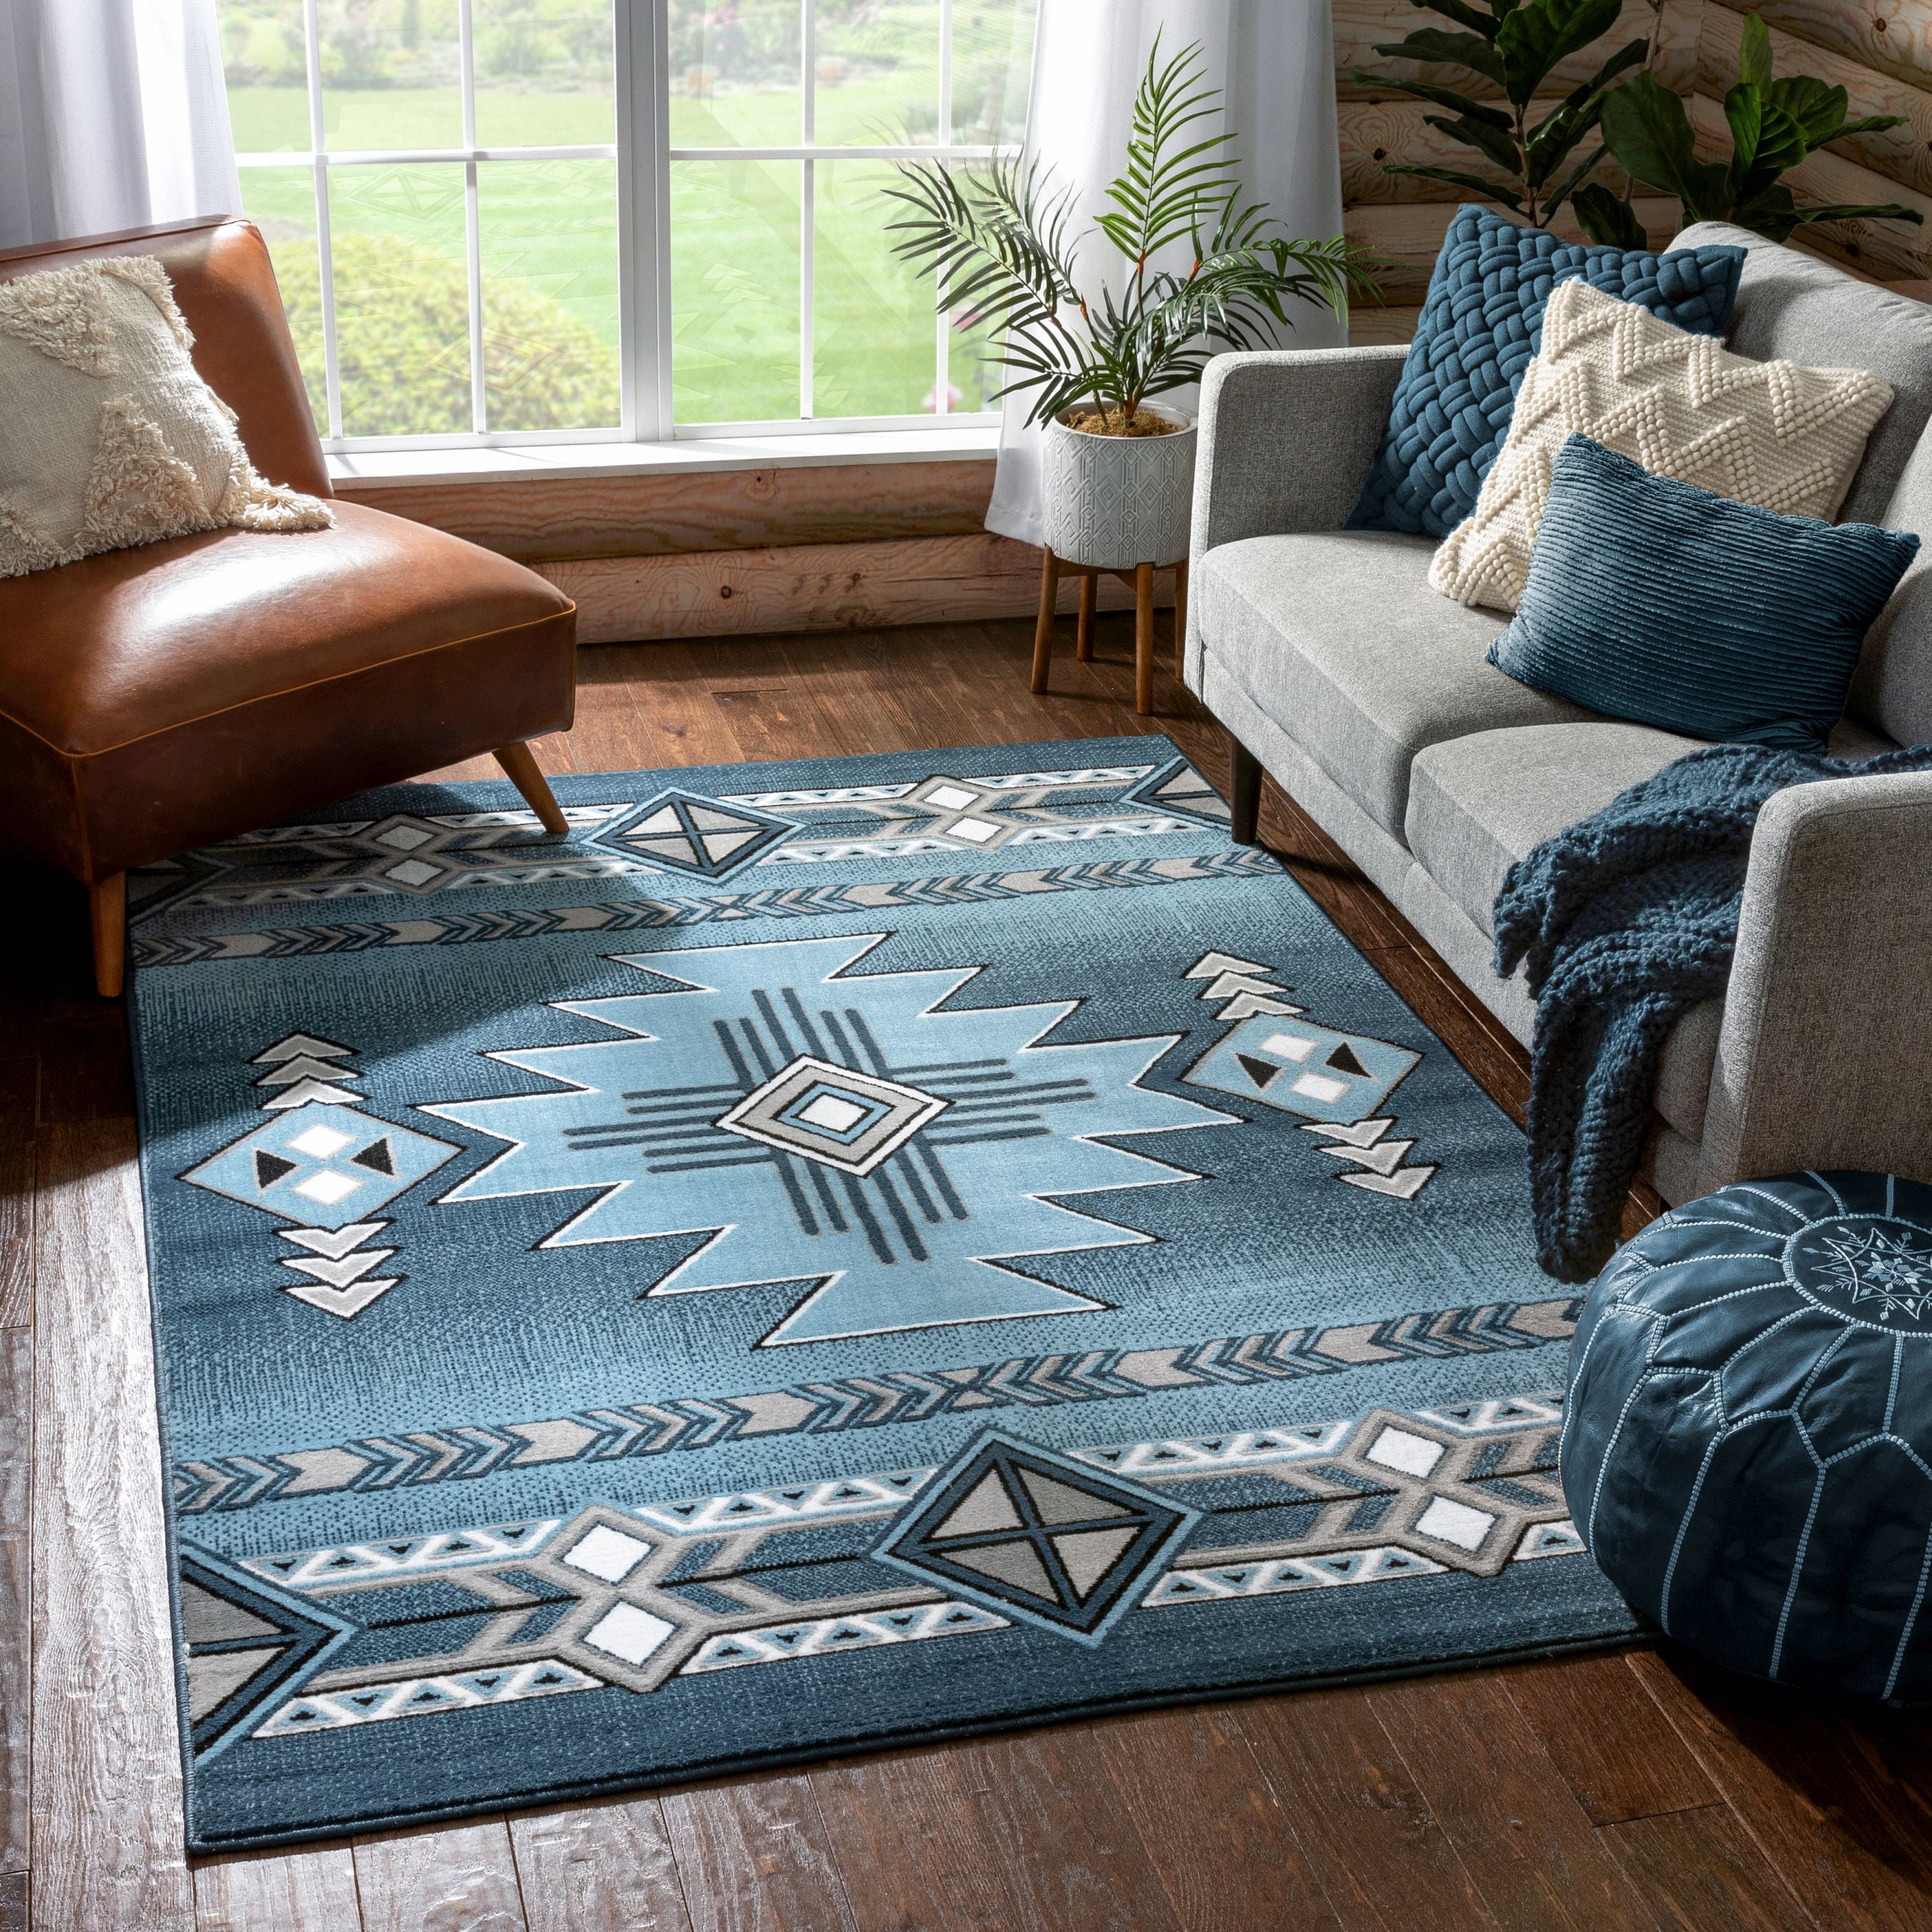 Grey Tribal Runner Rugs Aztec Living Room Rug Affordable Hallway Runner Carpet 